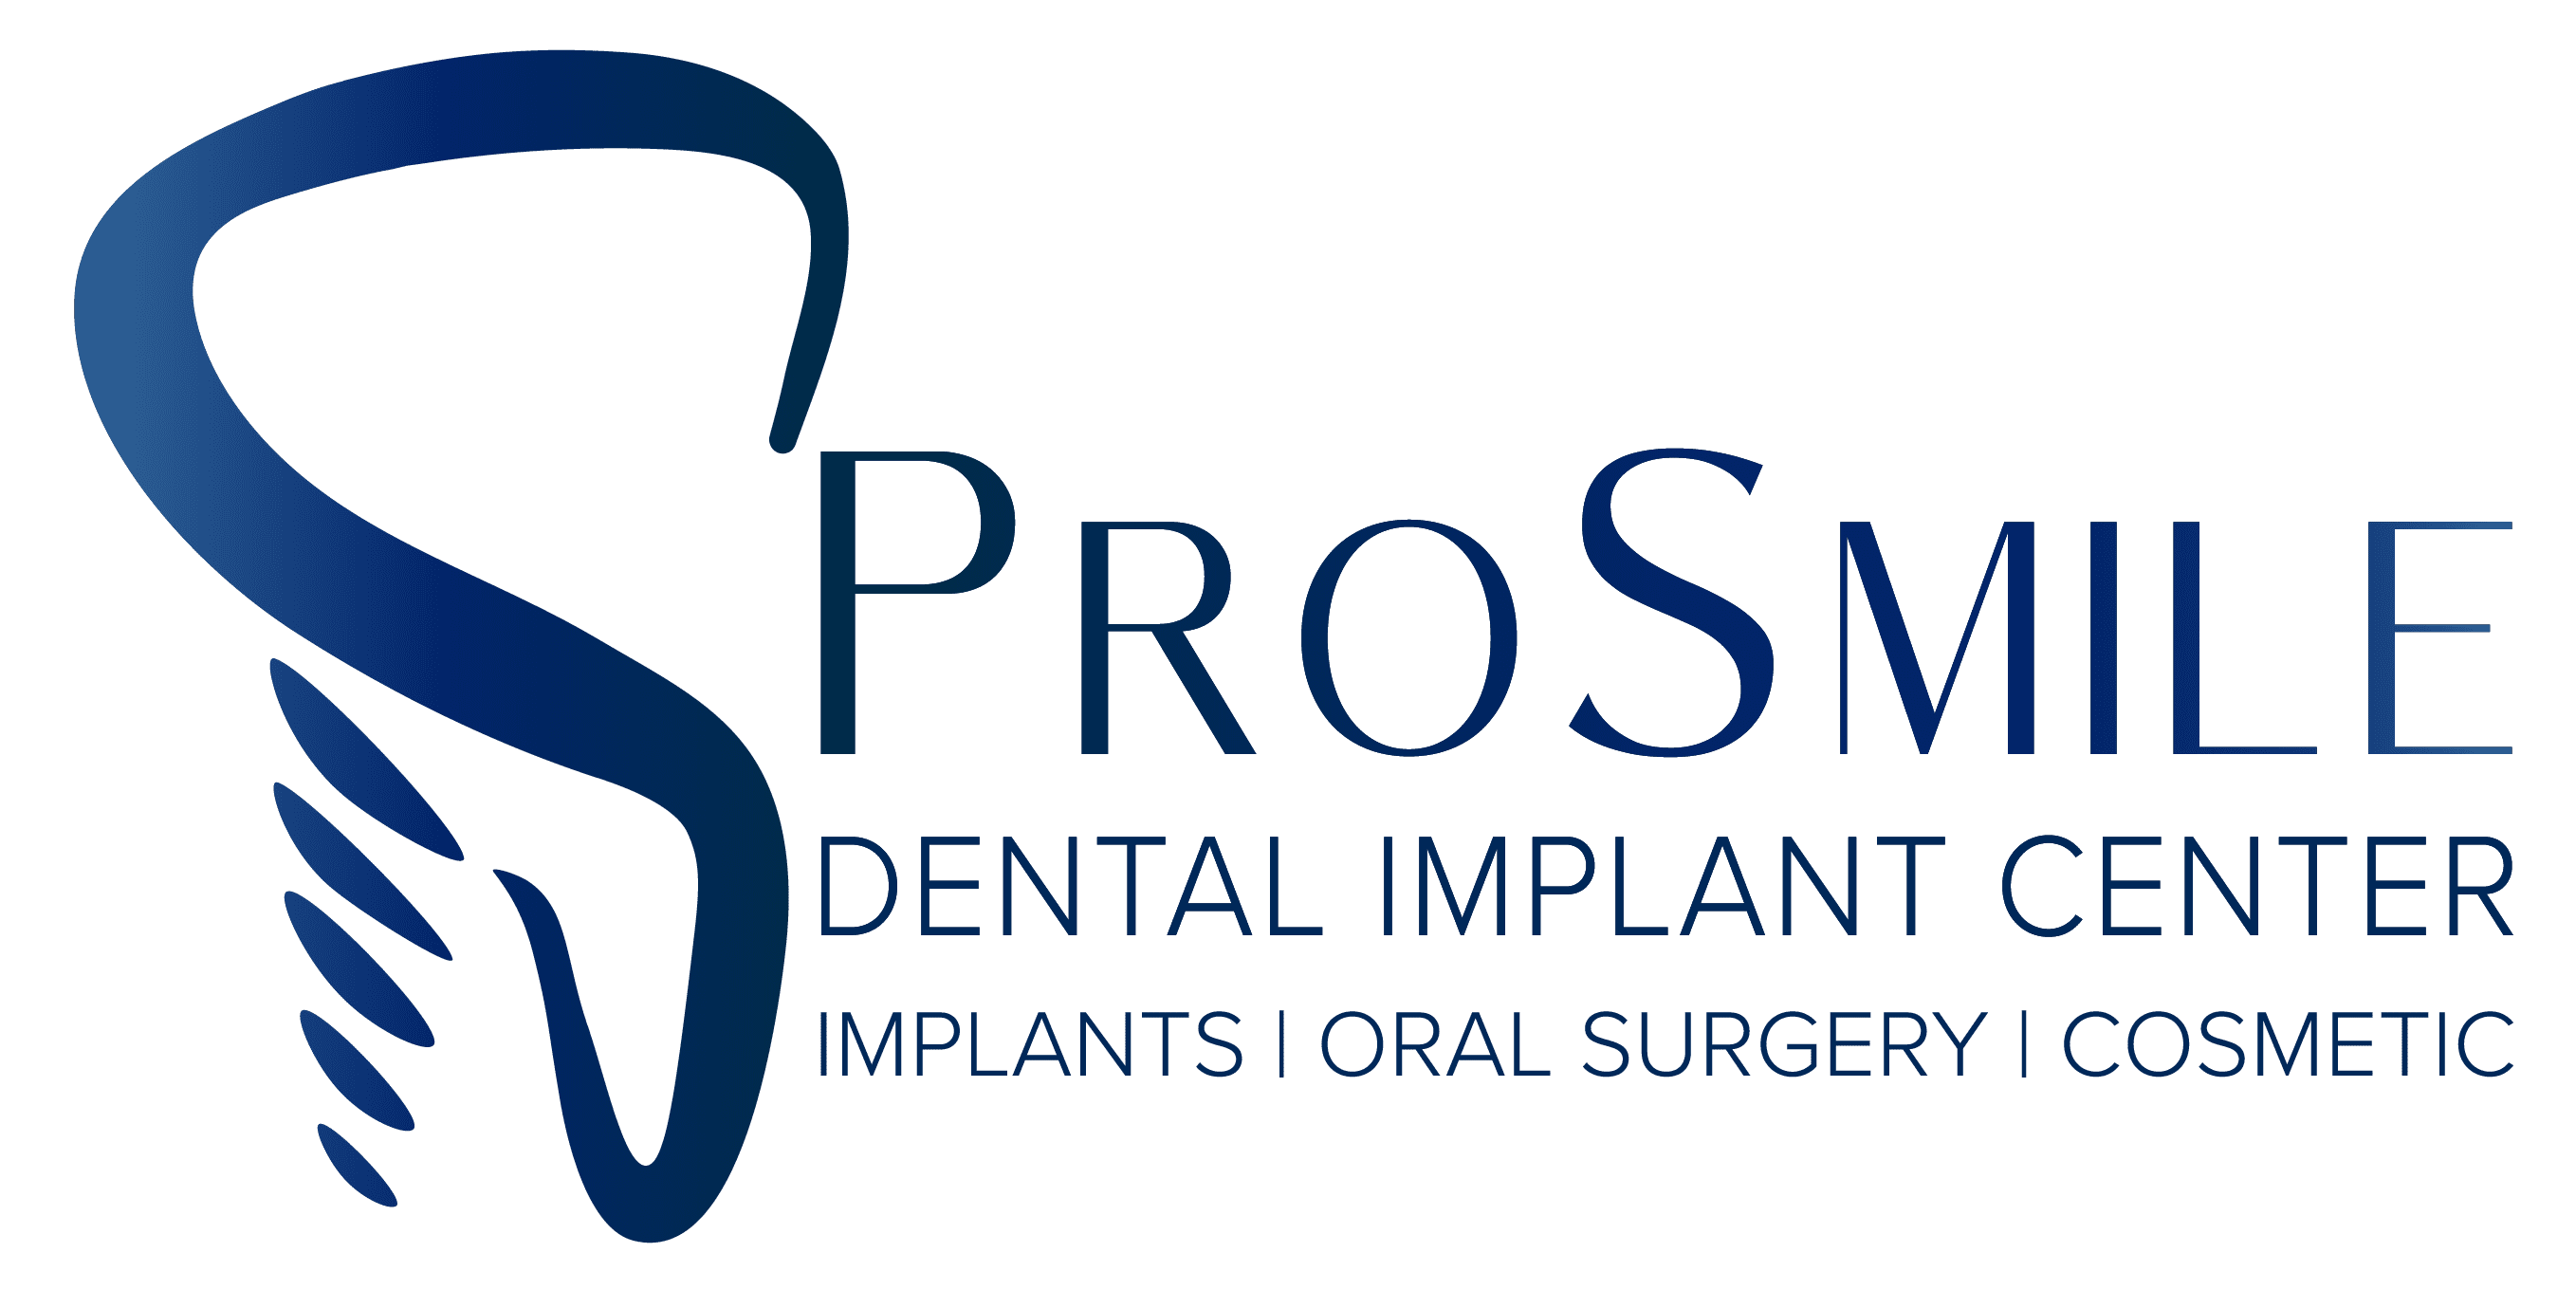 Dental Implant Center in Scottsdale Arizona